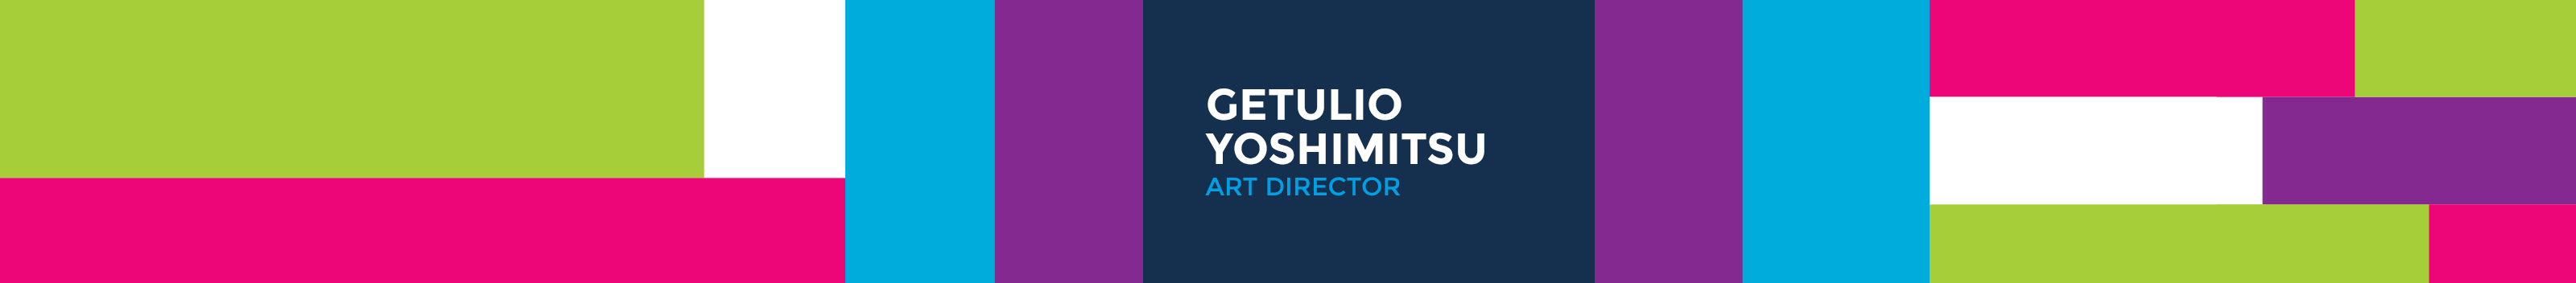 Banner profilu uživatele Getulio Yoshimitsu